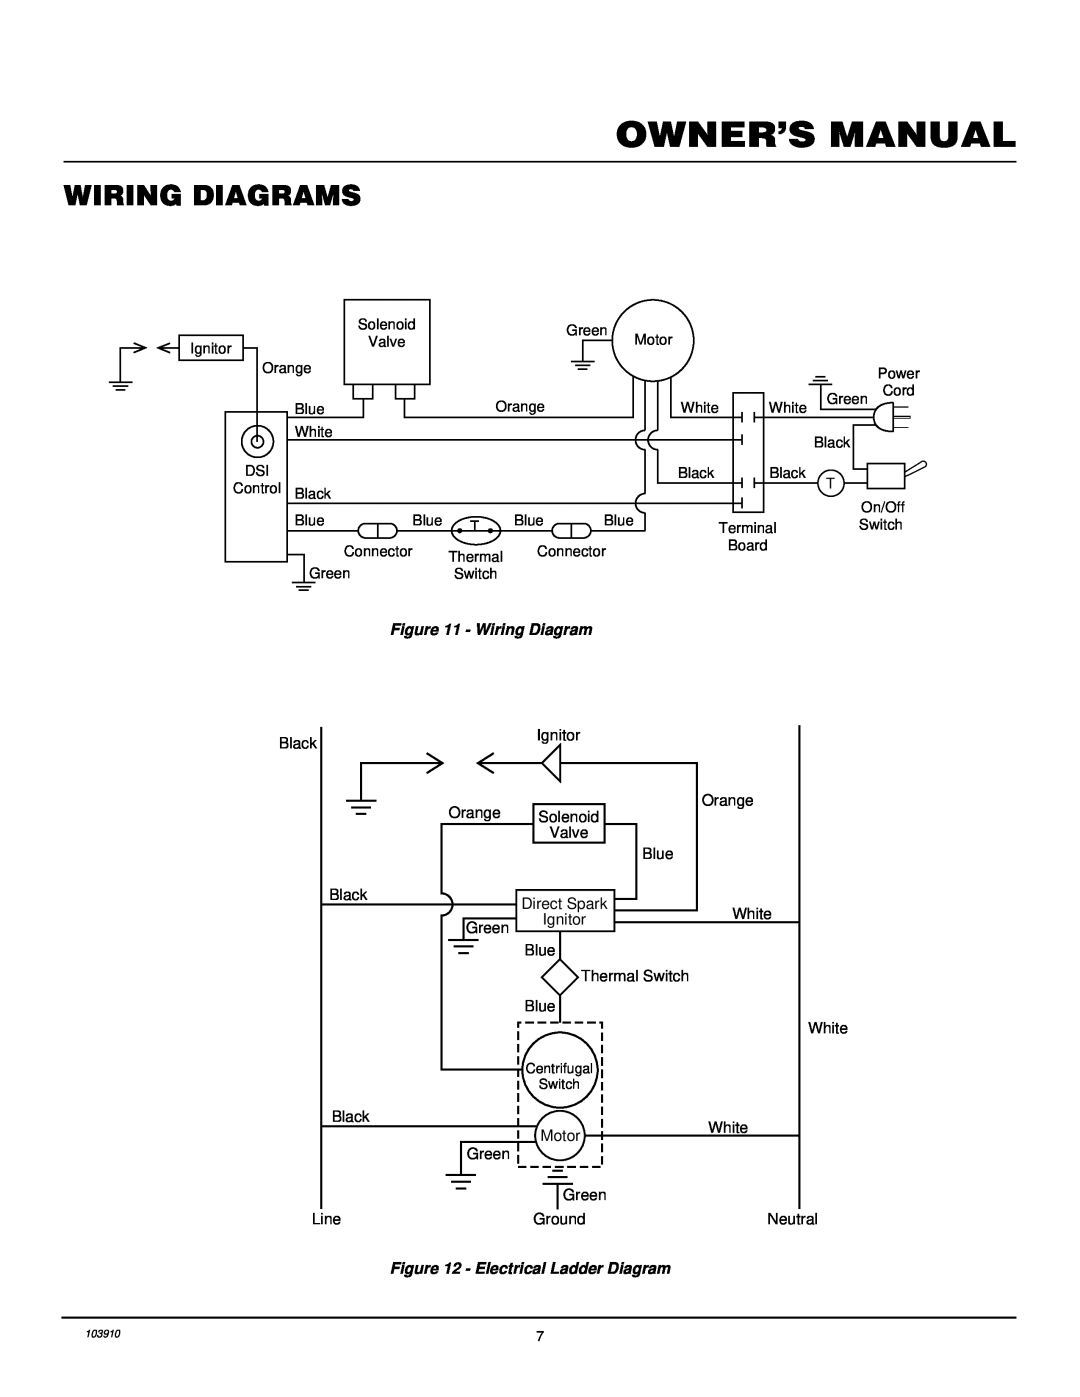 Desa RCLP375B owner manual Wiring Diagrams, Electrical Ladder Diagram 